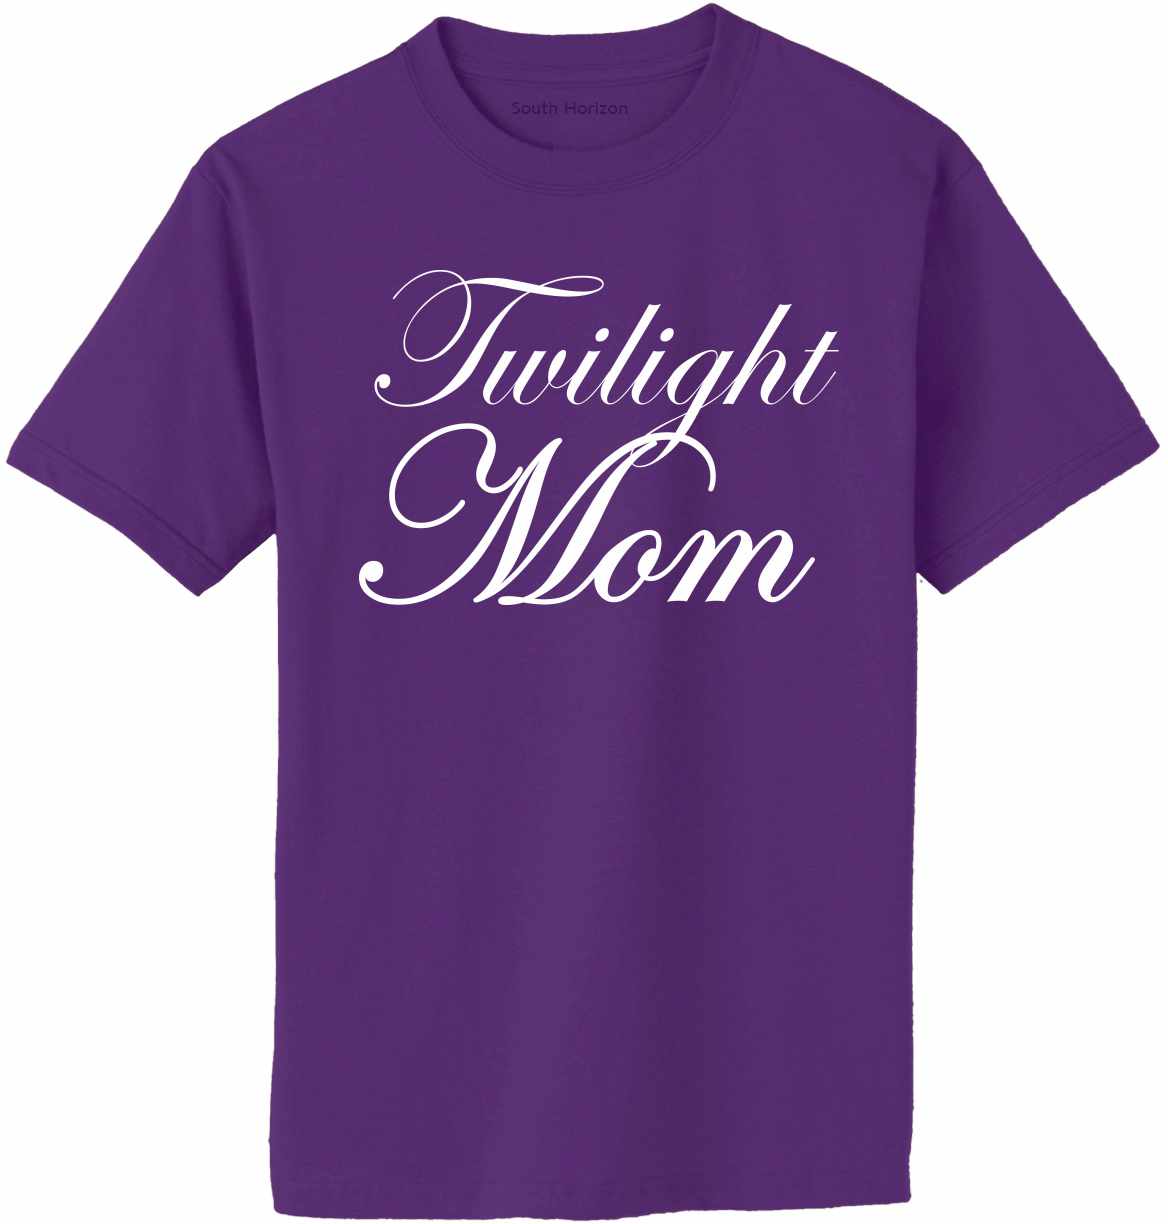 TWILIGHT MOM Adult T-Shirt